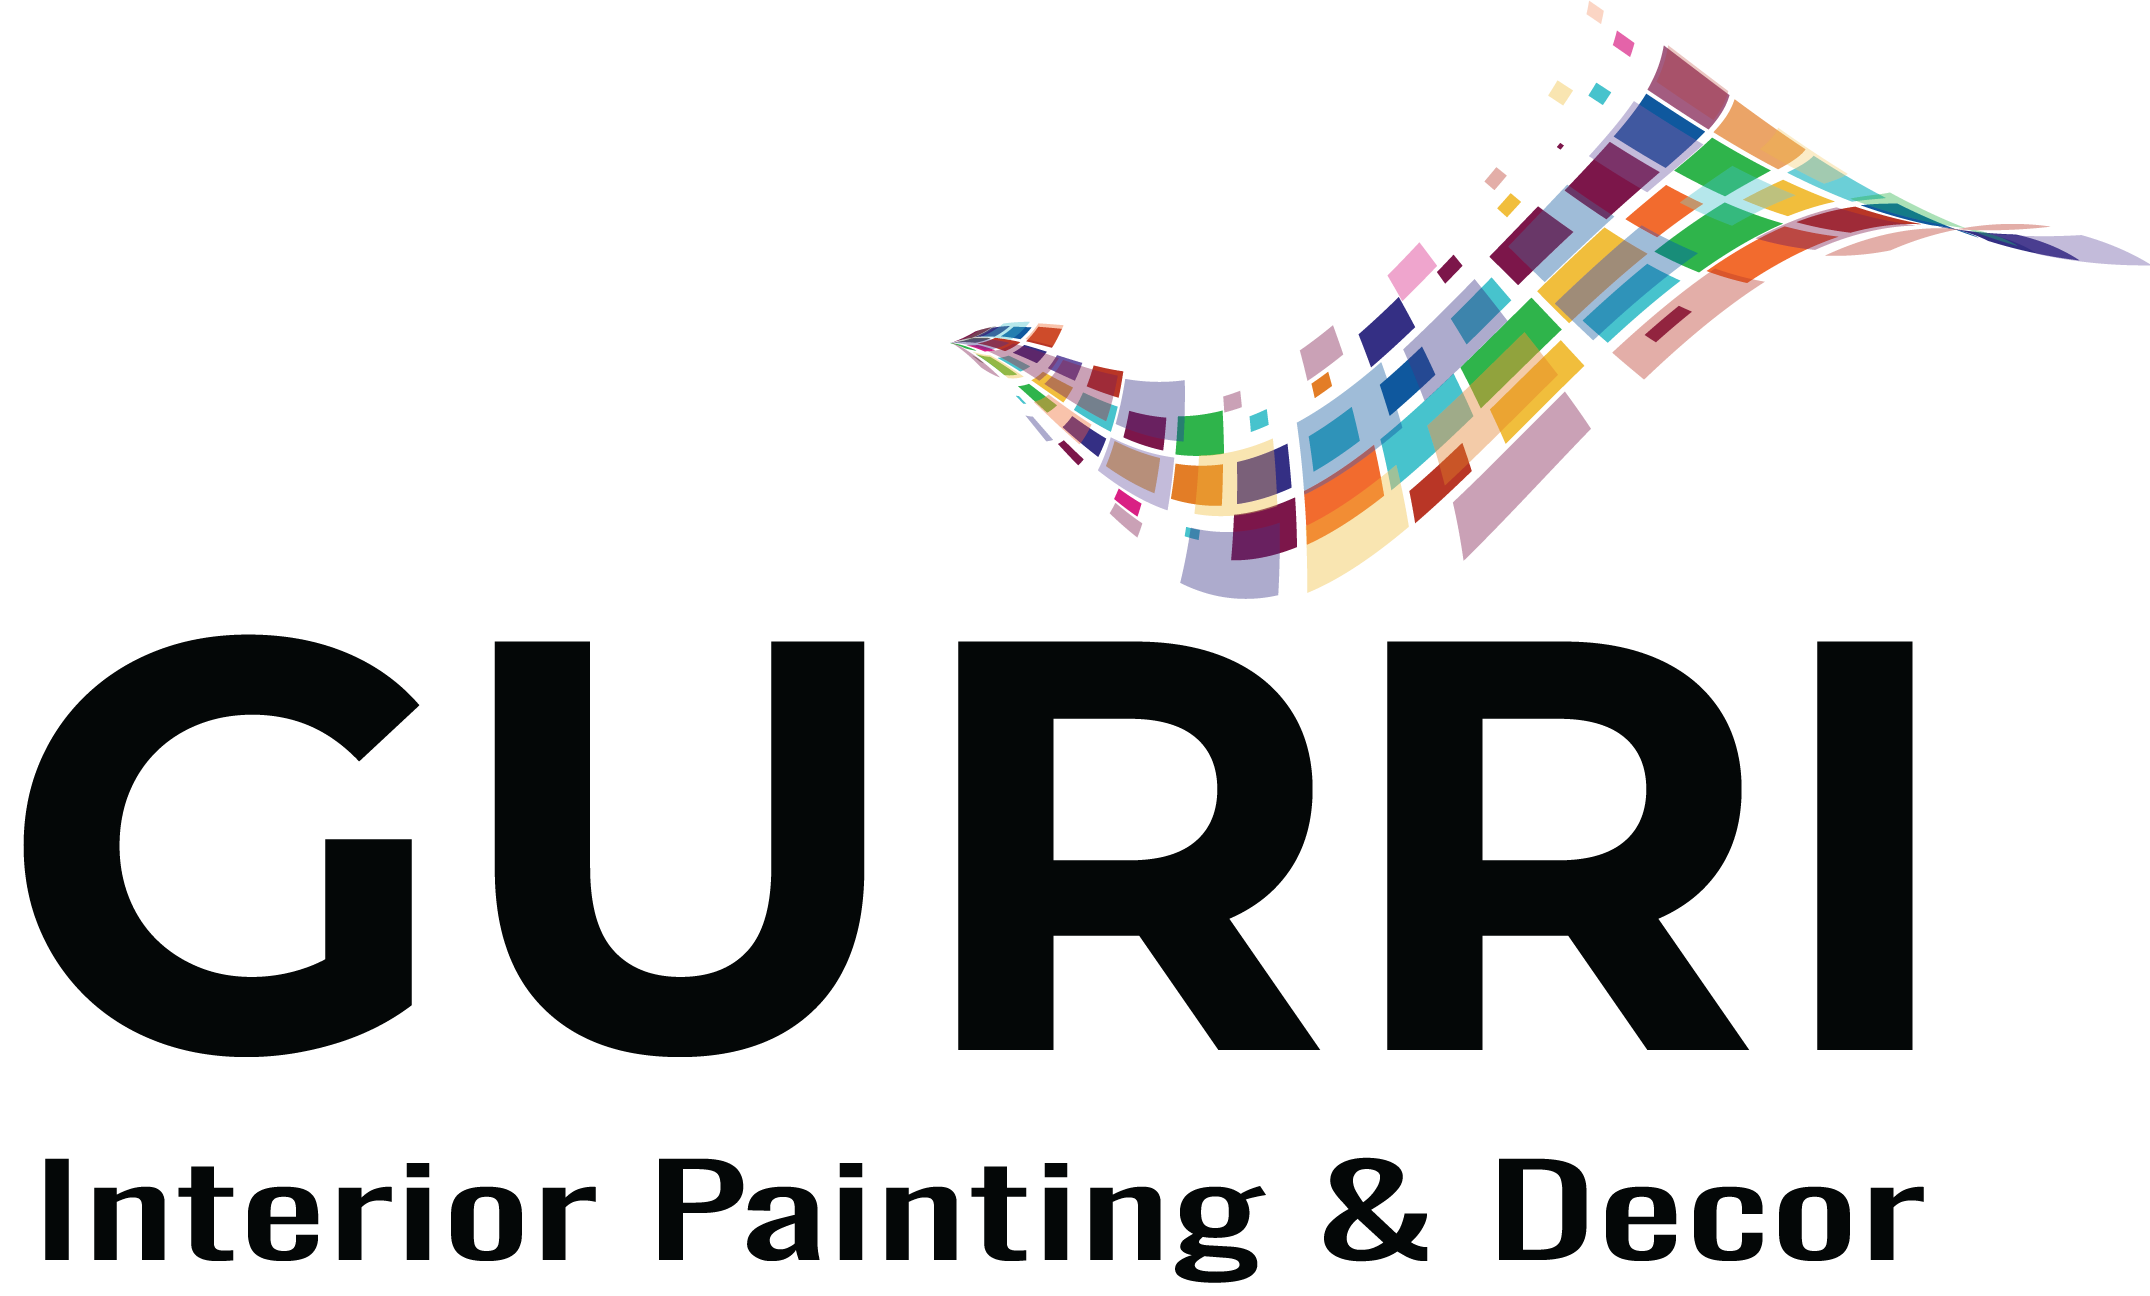 Gurri Interior Painting and Decor